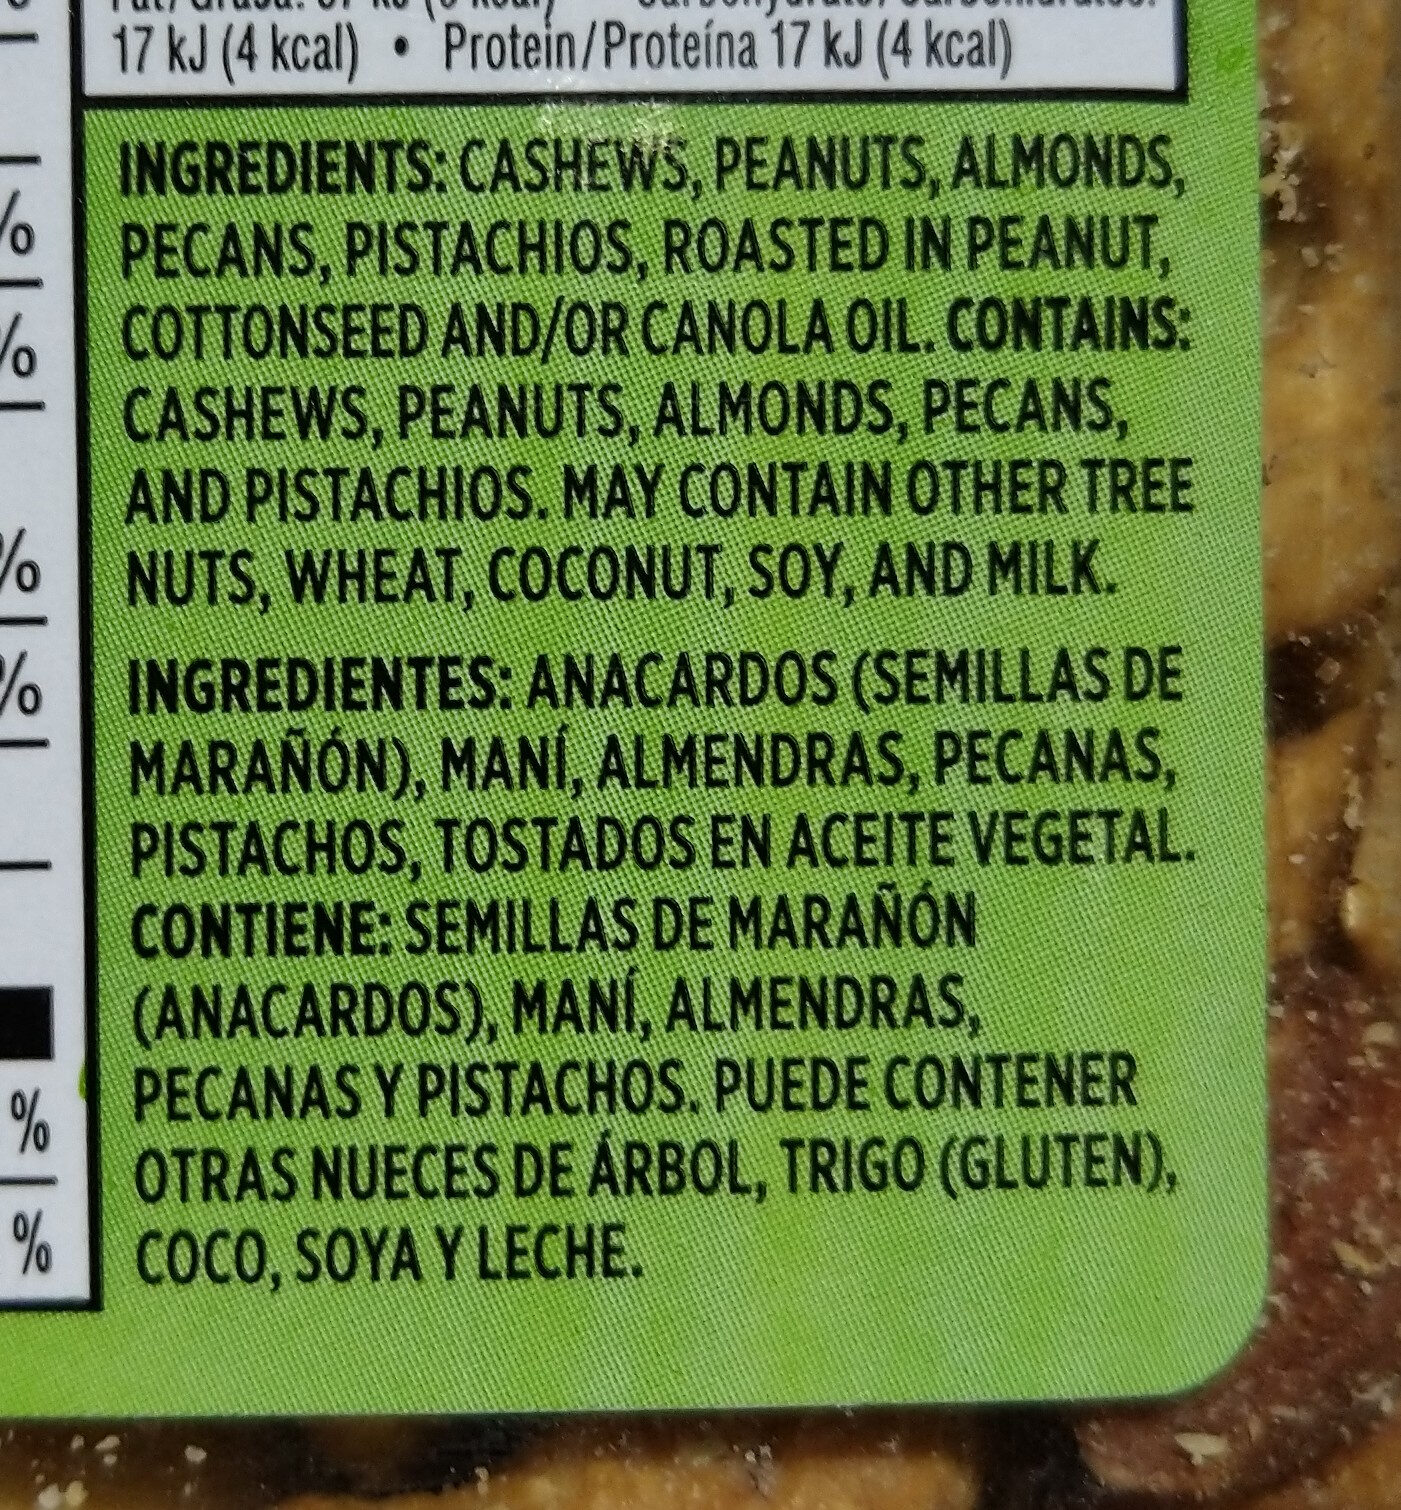 Mixed nuts - Ingredientes